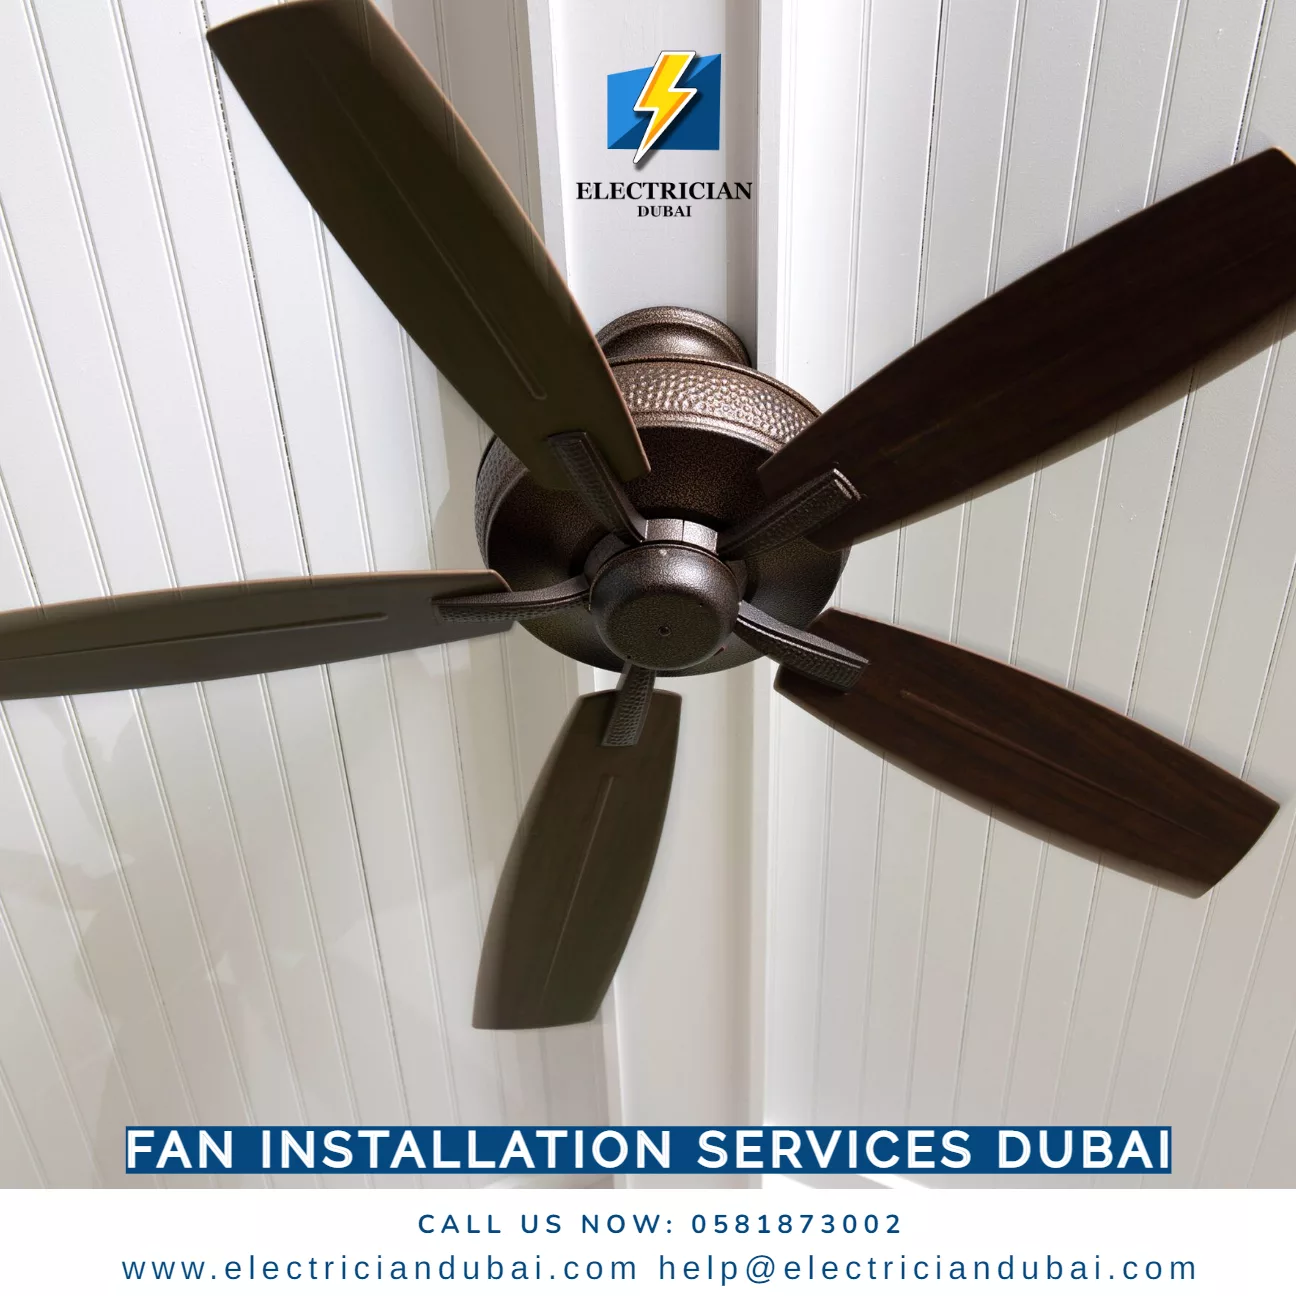 Fan Installation Services Dubai